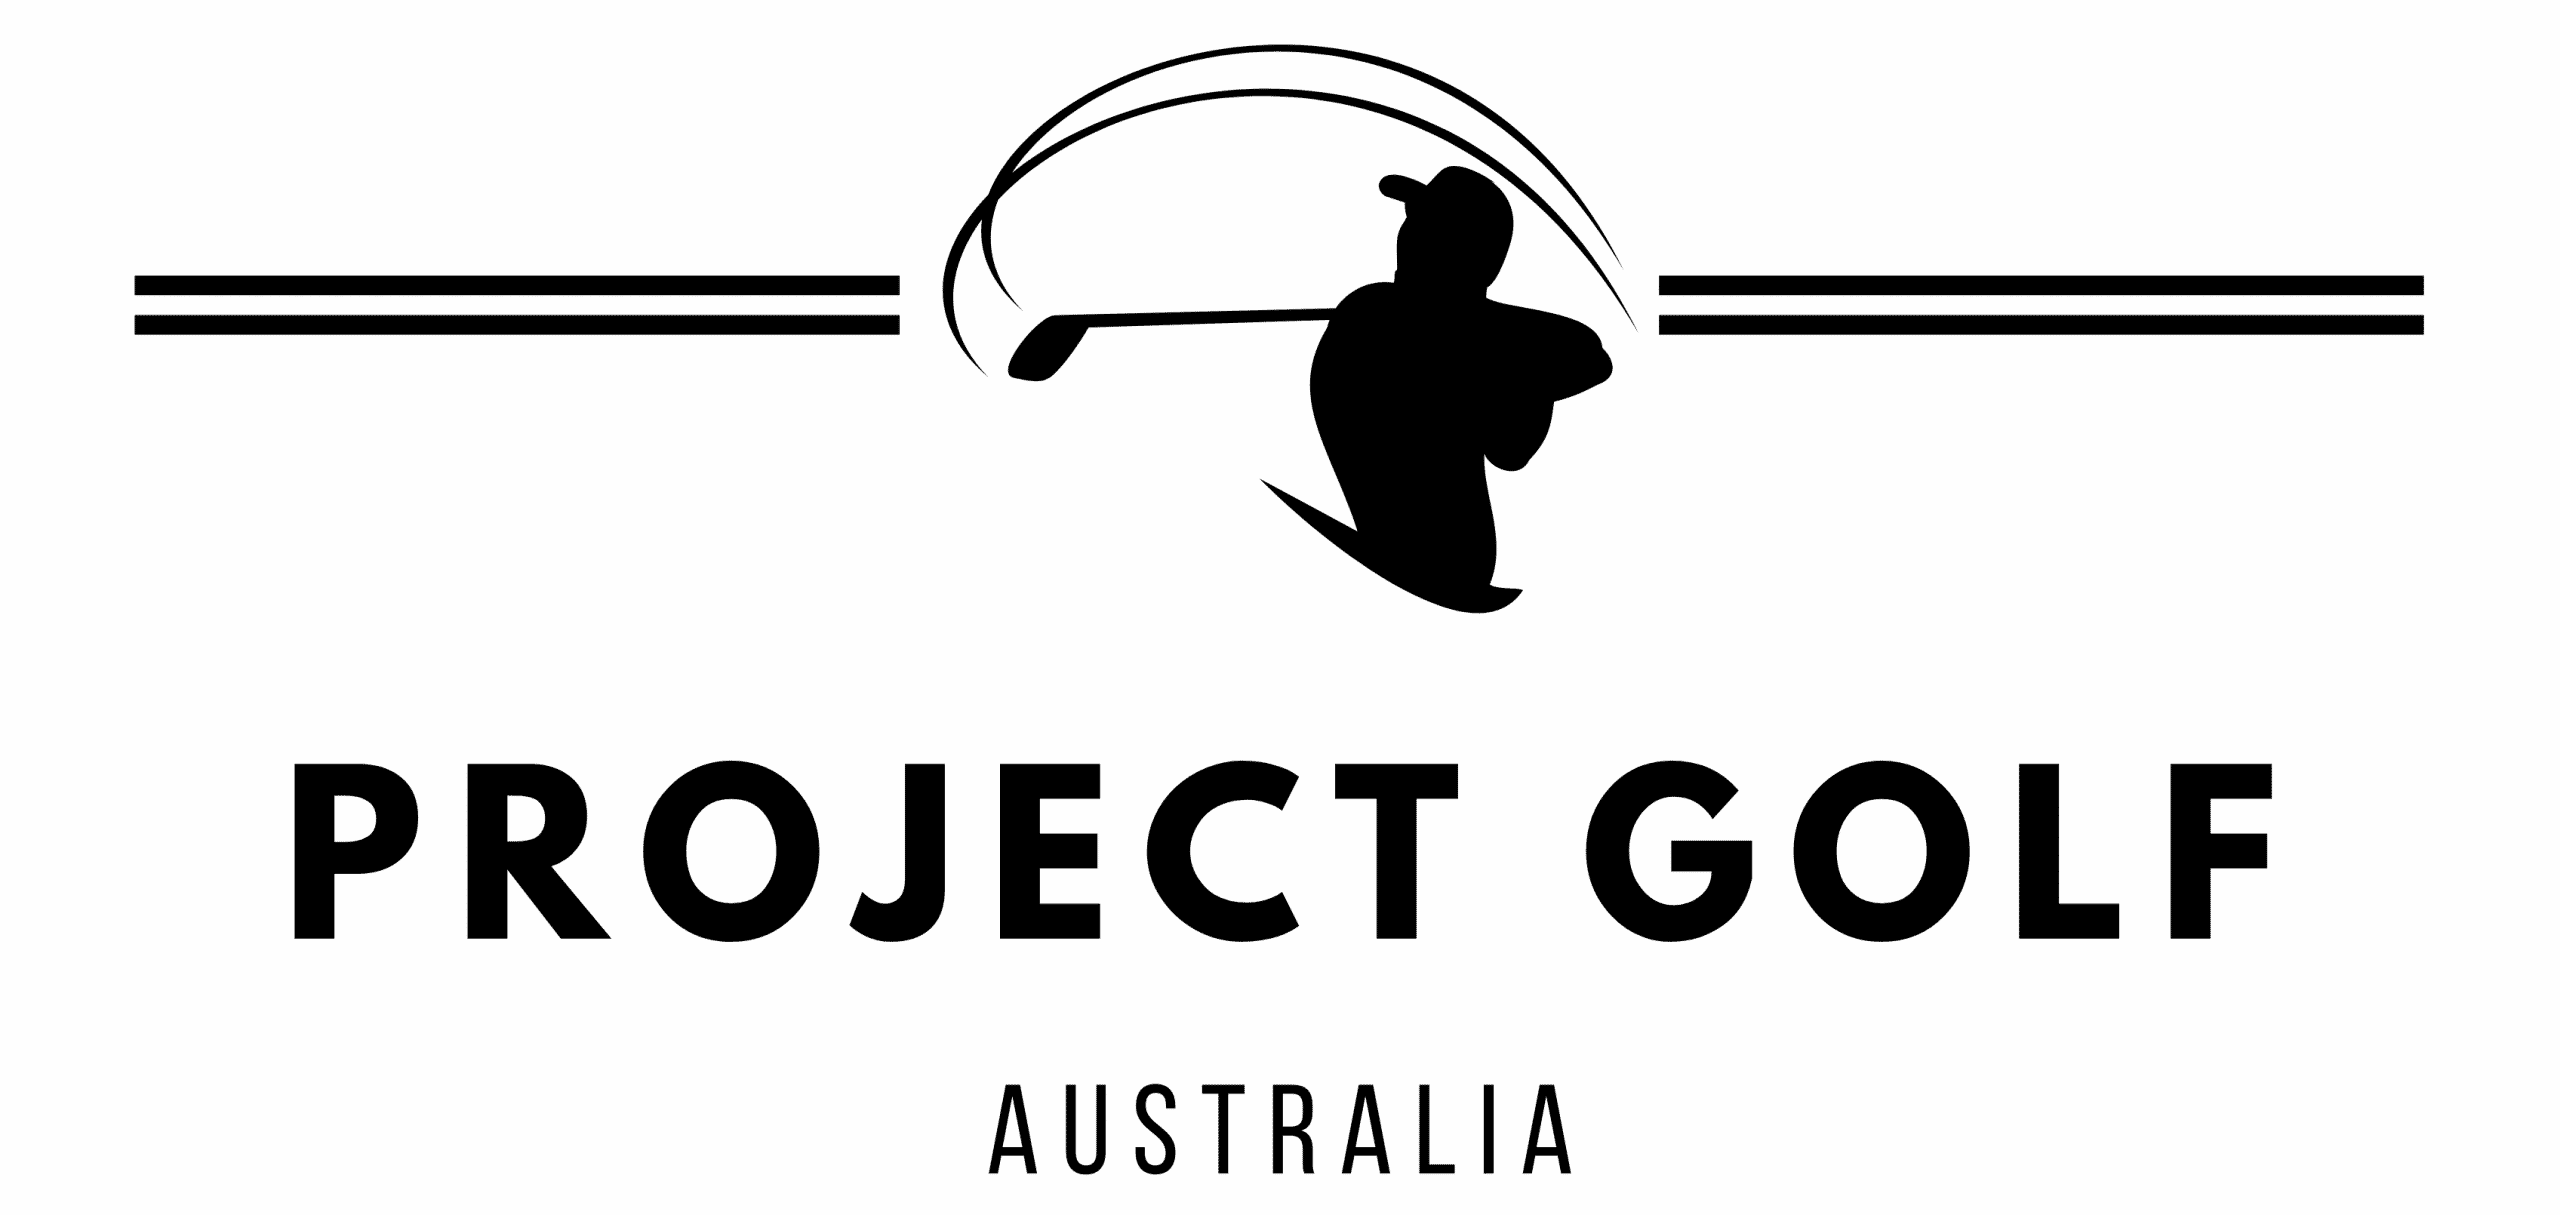 Project Golf Australia